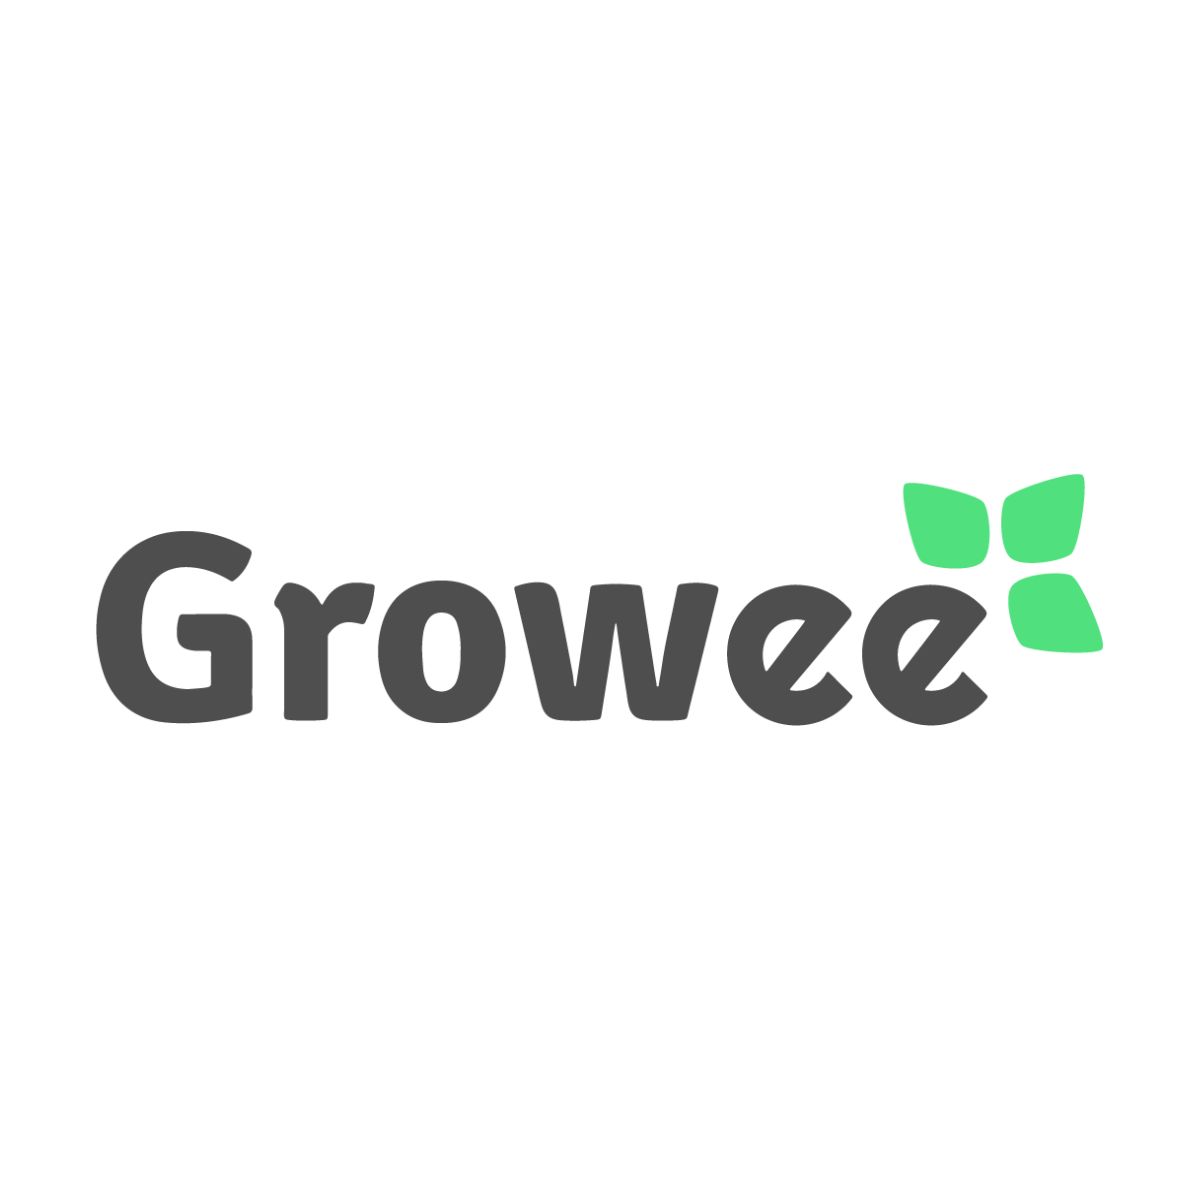 Growee Technologies logo